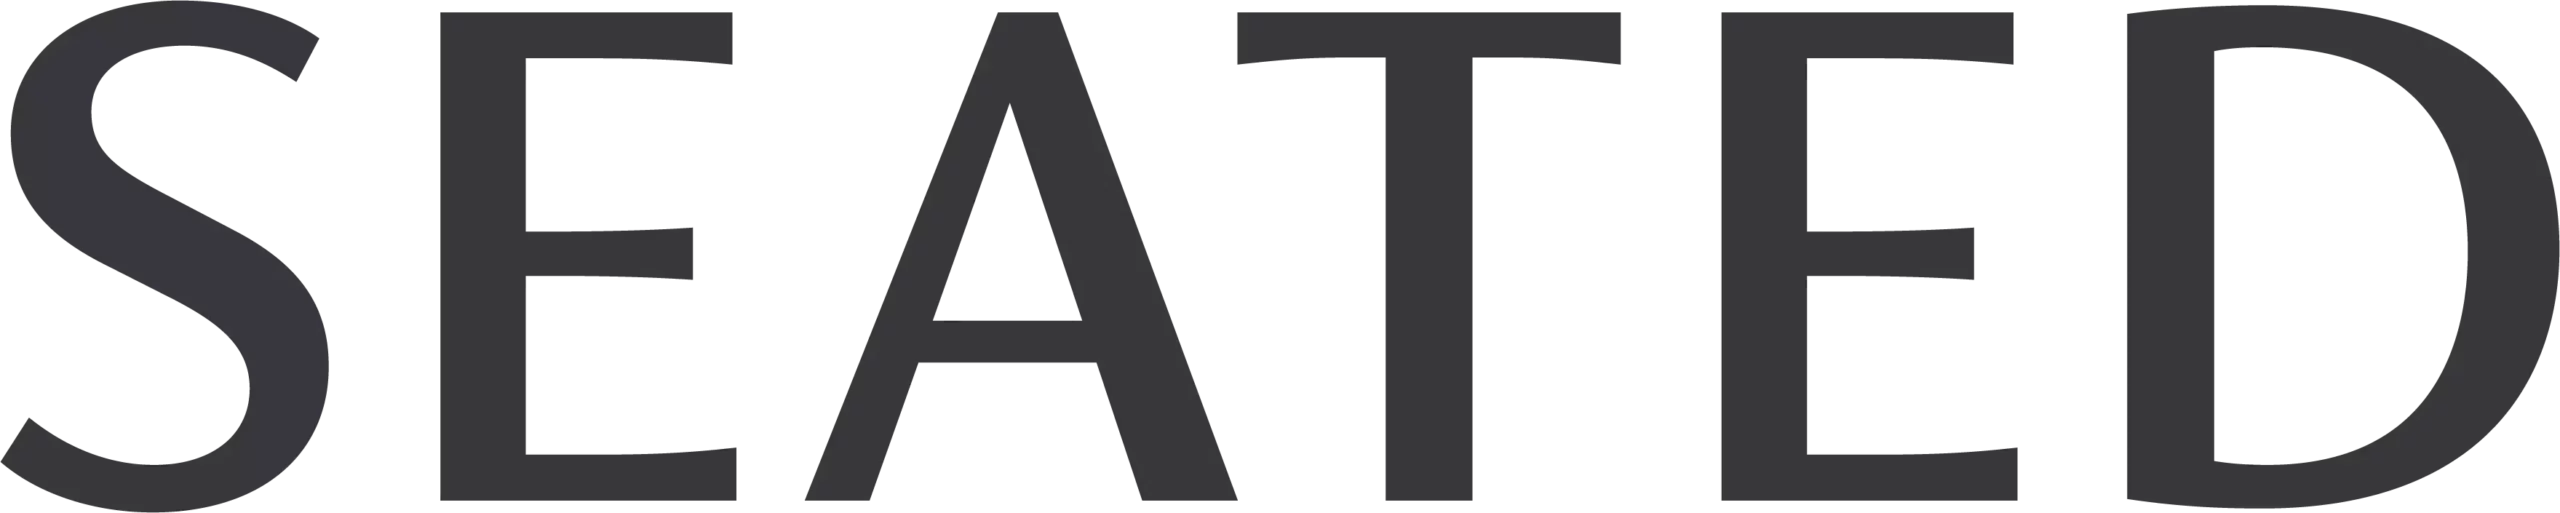 Seated Logo